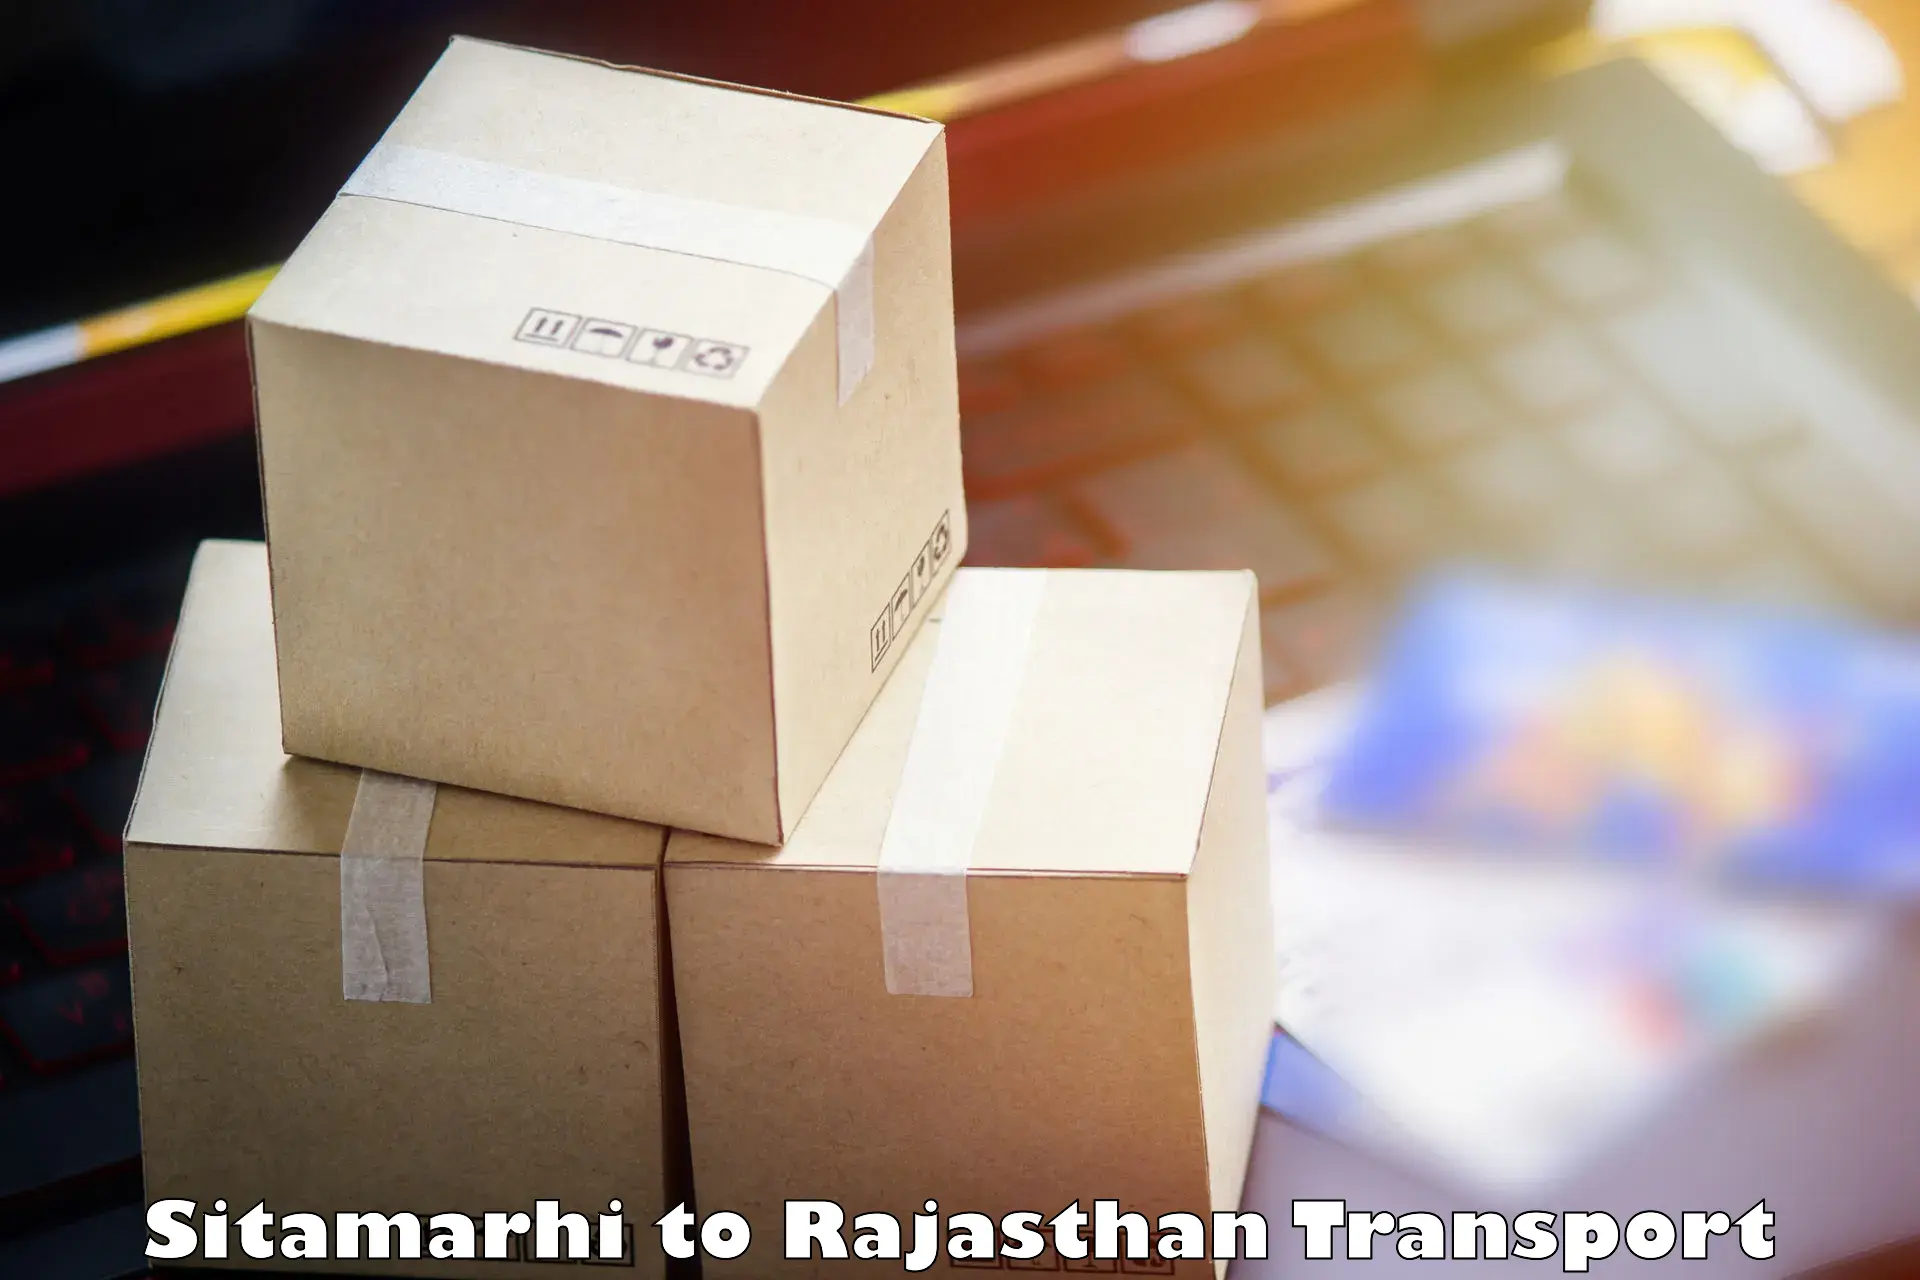 Goods delivery service Sitamarhi to Danta Ramgarh